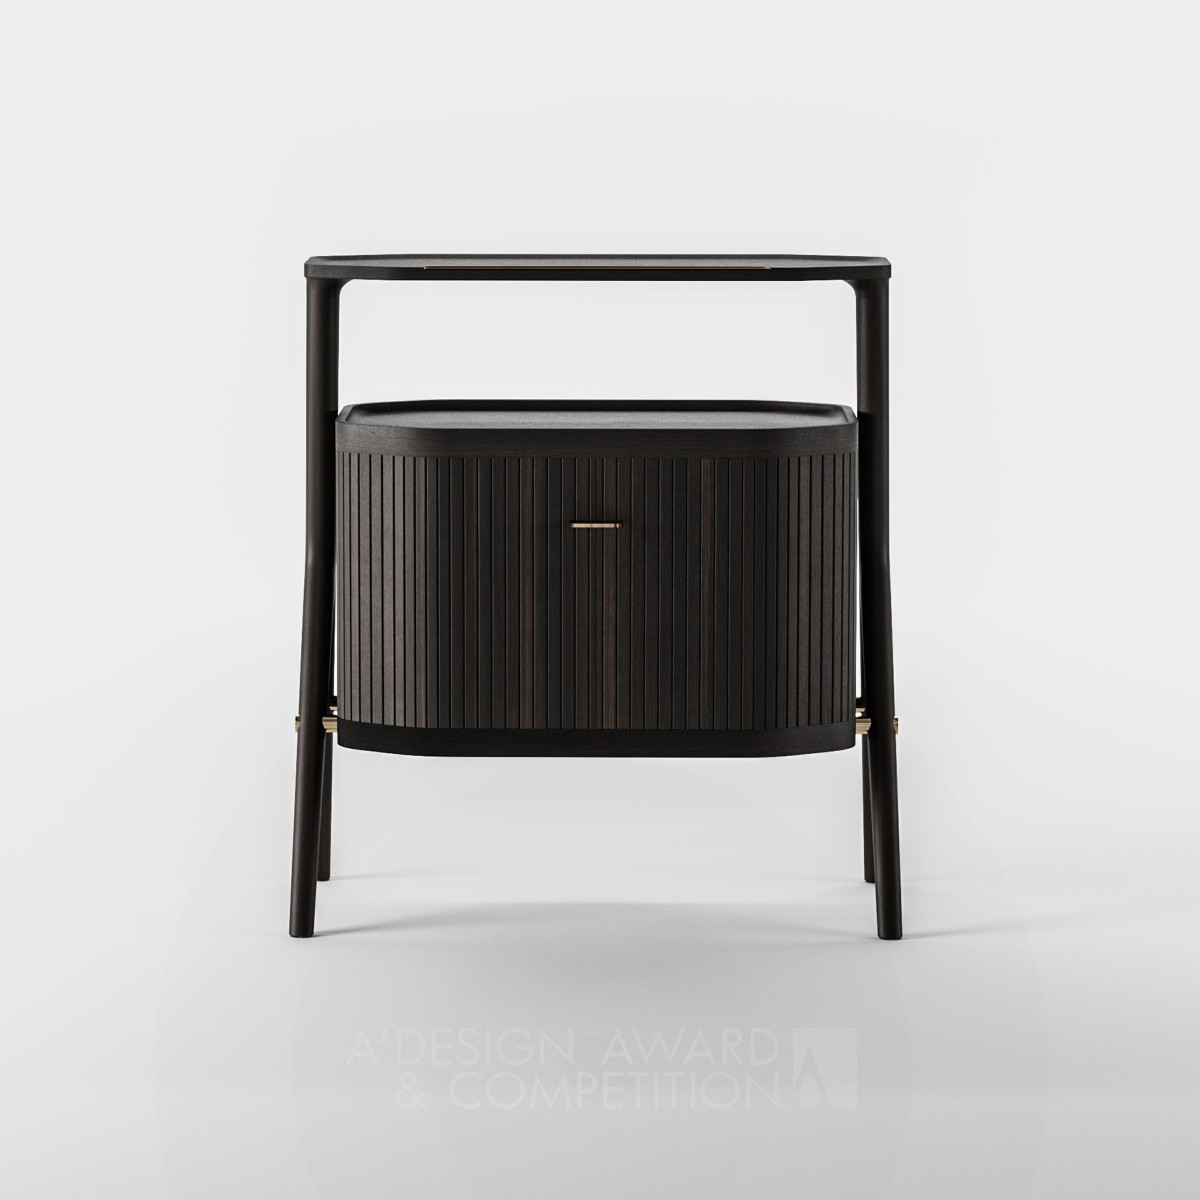 Jun Zhang wins Silver at the prestigious A' Furniture Design Award with Rong Tea Edge Cabinet.